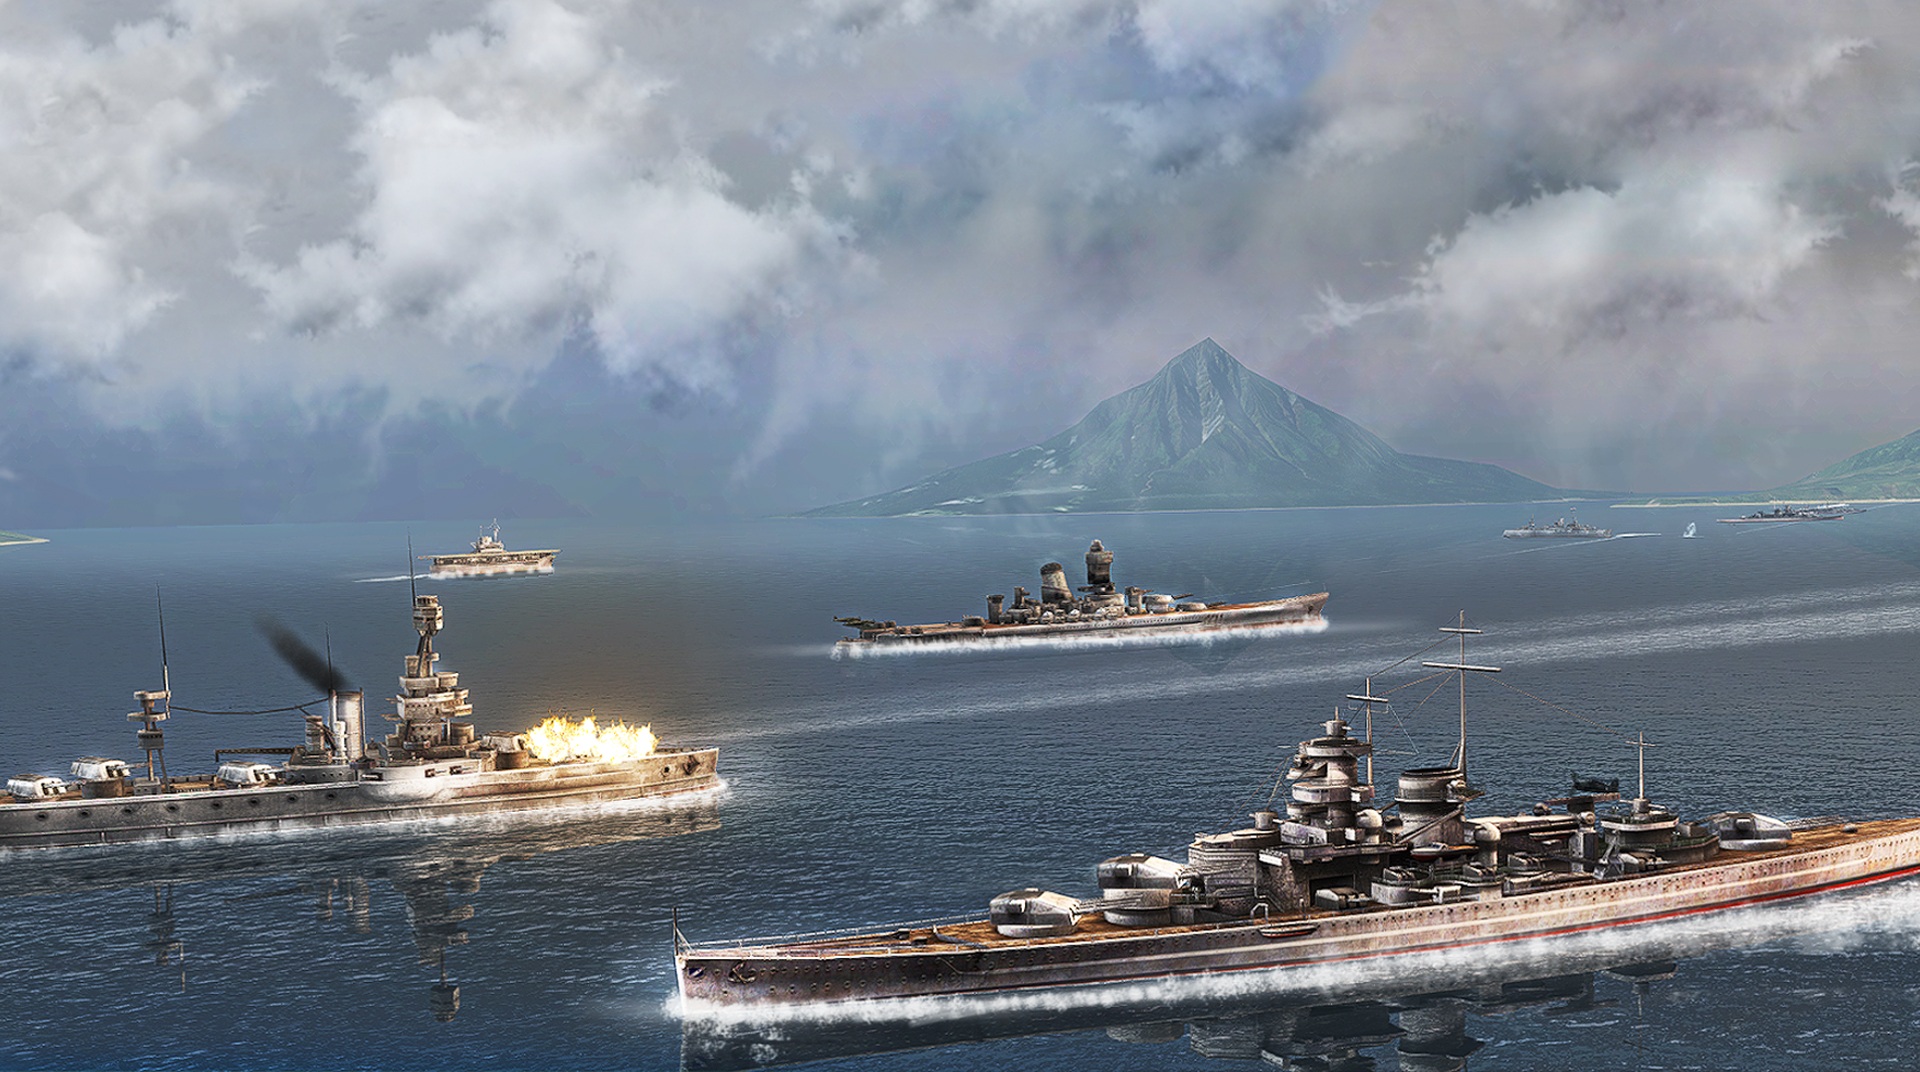 Battle of Warships: Naval Blitz